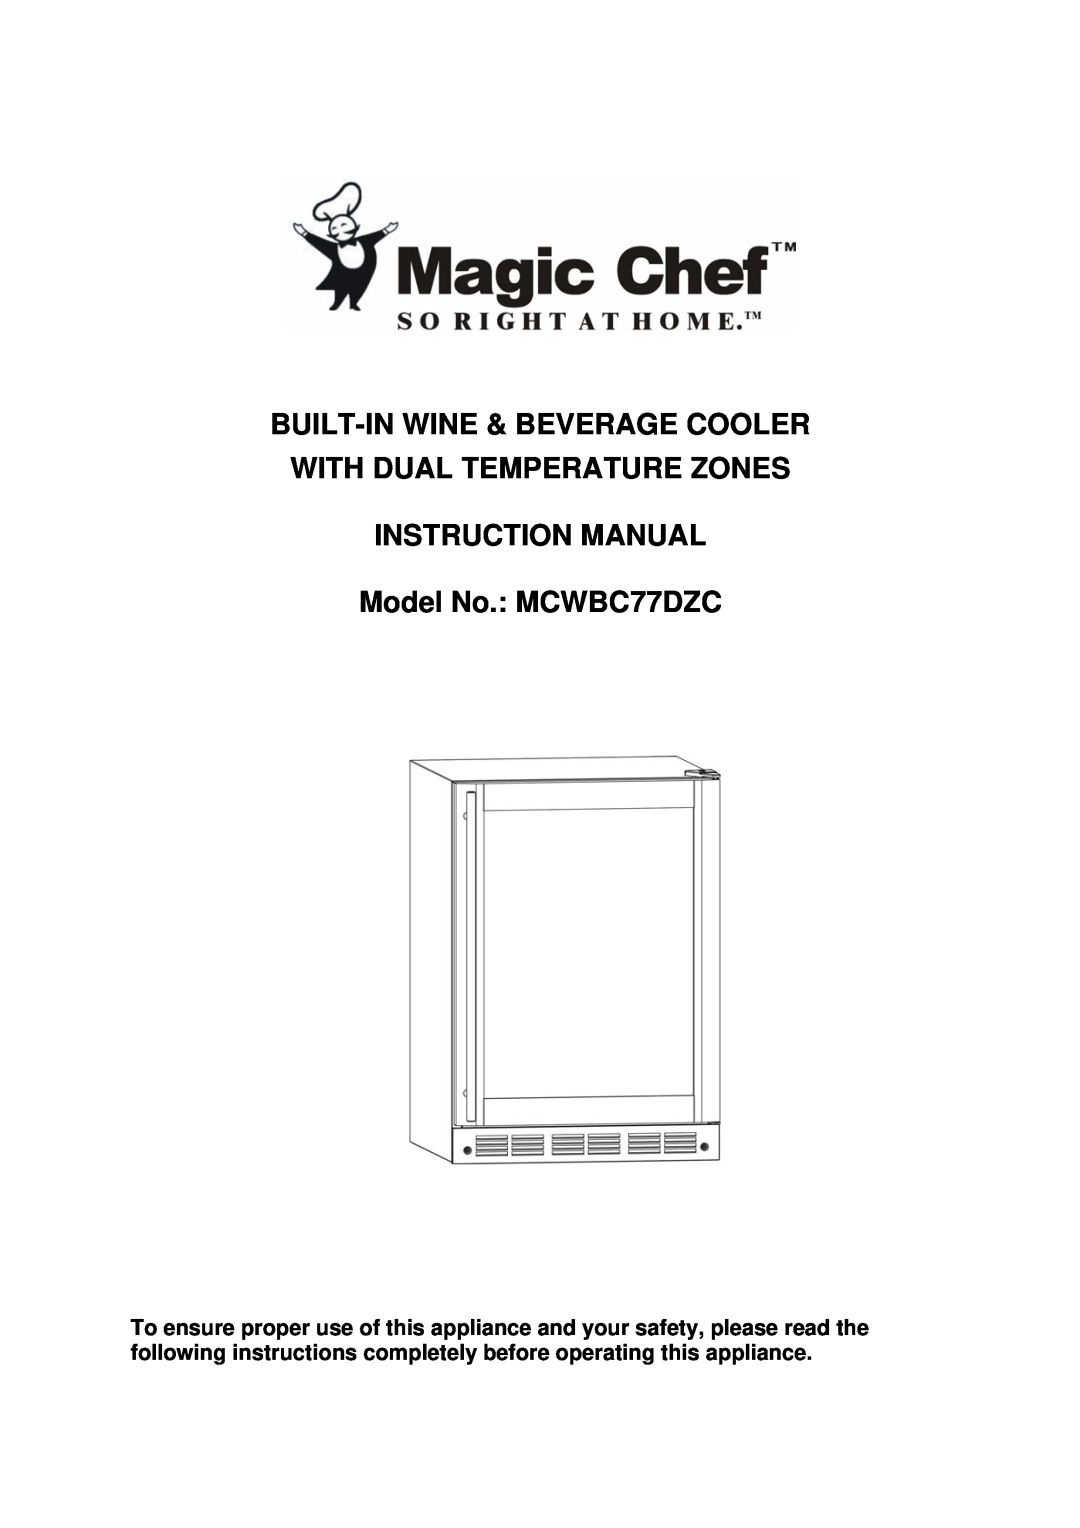 Magic Chef instruction manual Built-Inwine & Beverage Cooler, Model No. MCWBC77DZC 